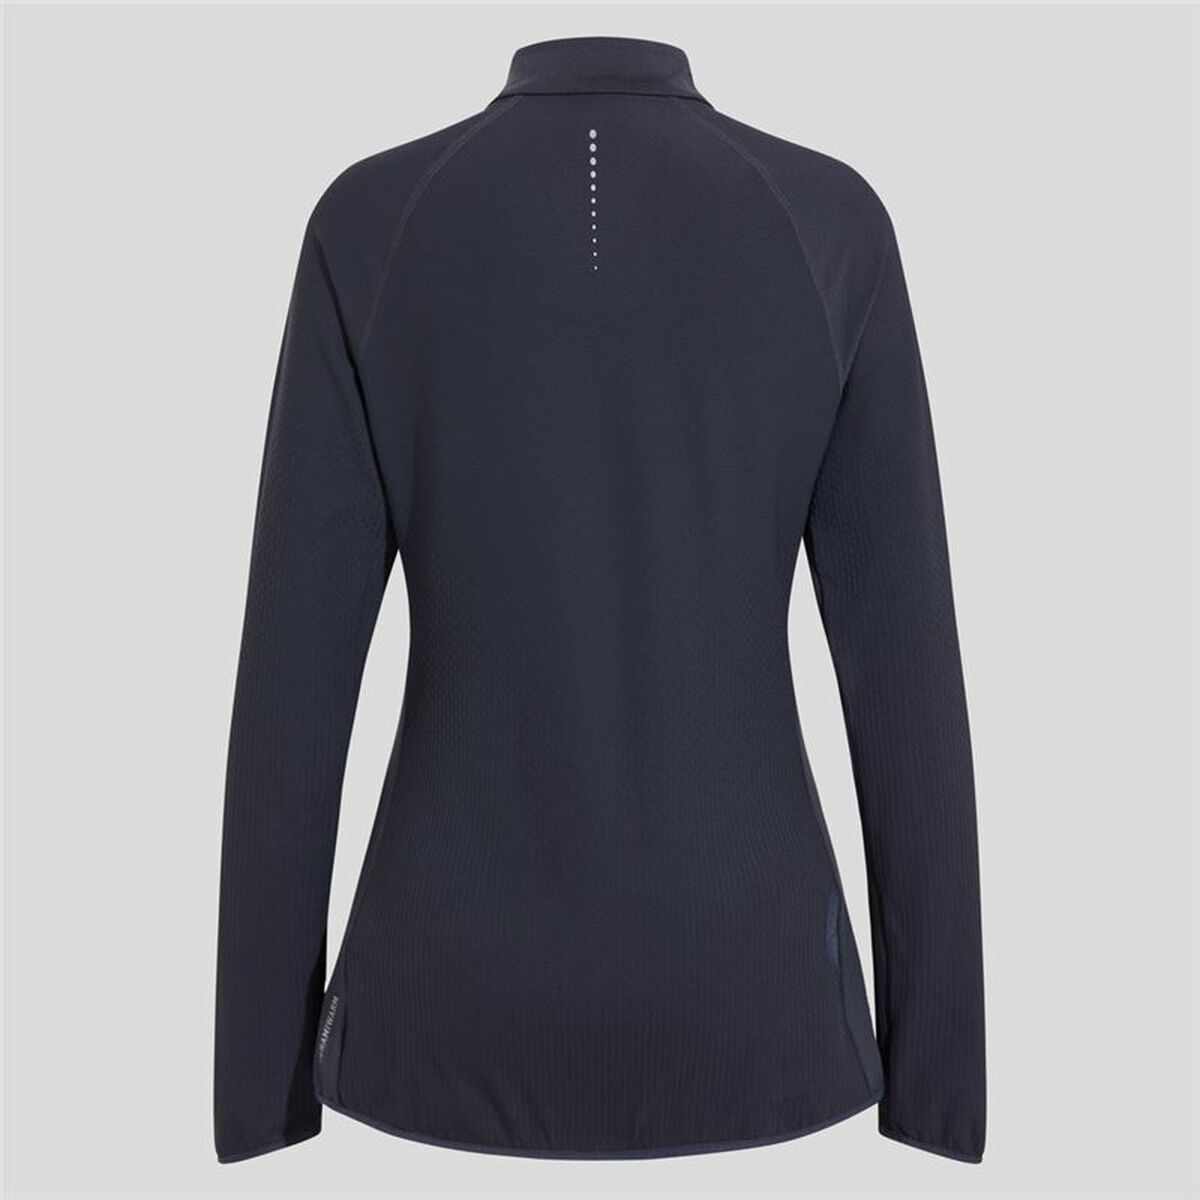 Unisex Long Sleeve T-Shirt Odlo 1/2 Zip Zeroweight Black